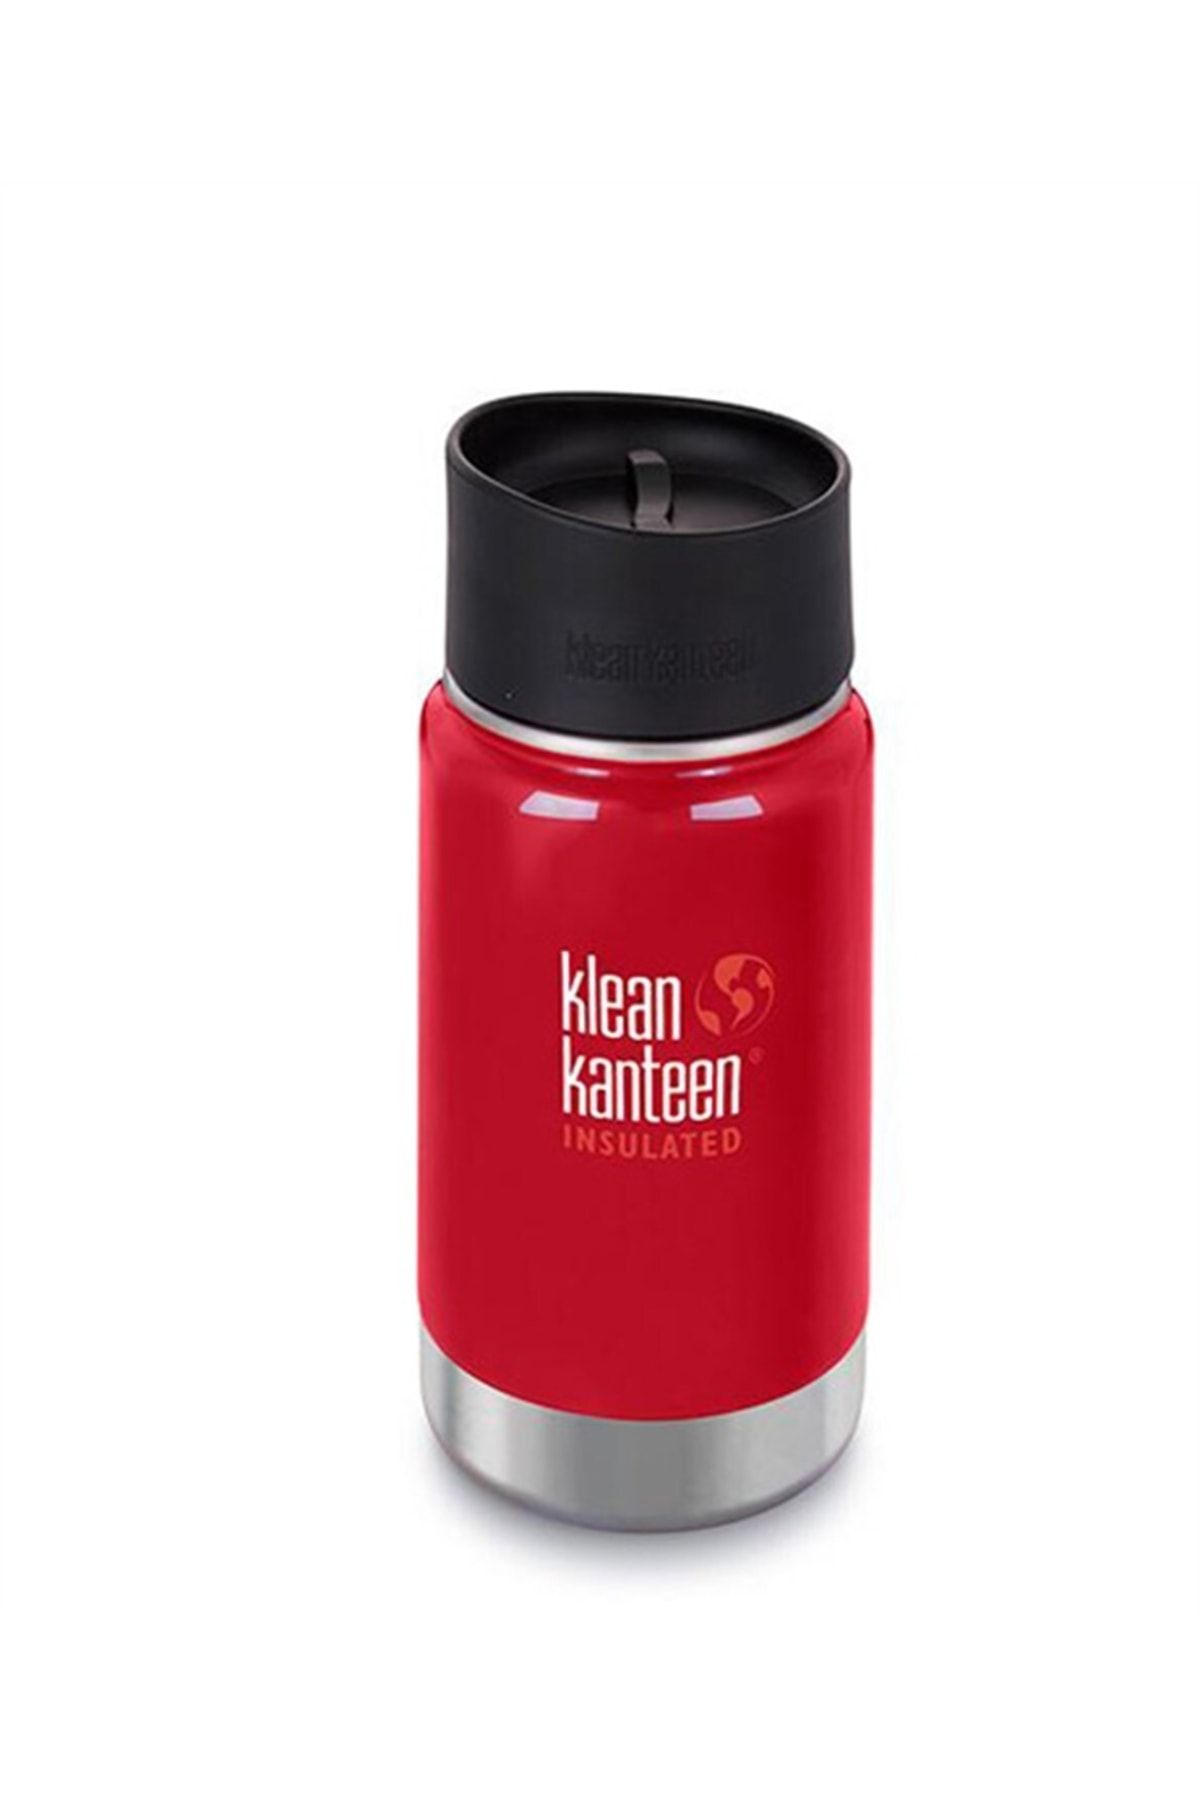 Klean Kanteen Insulated Wide 12 Oz Cafe 2.0 (355 ml) - (1003125)